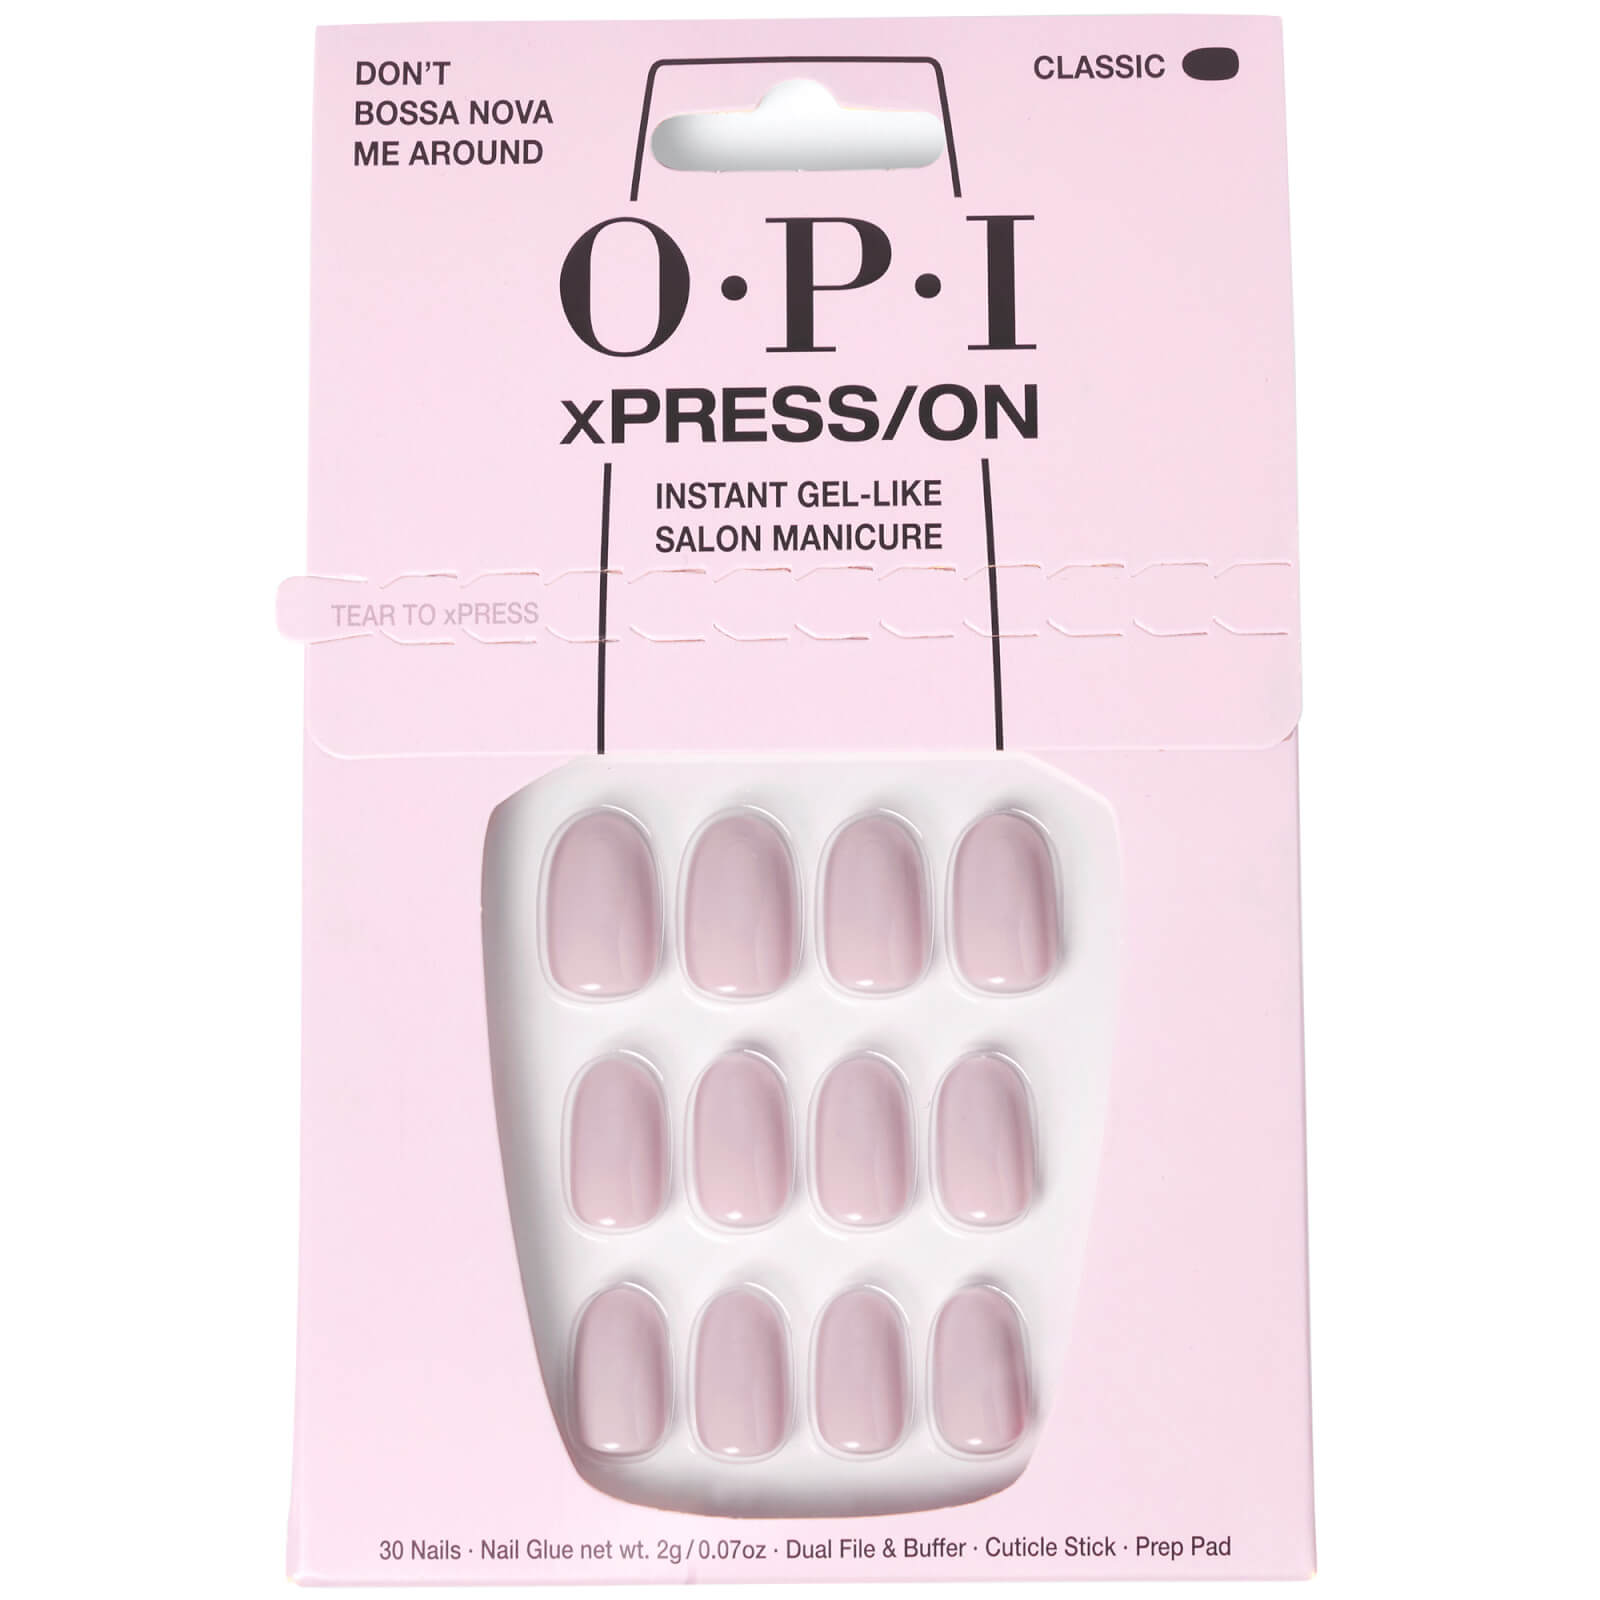 Image of OPI xPRESS/ON French Press Press on Nails for Gel-Like Salon Manicure - Don’t Bossa Nova Me Around